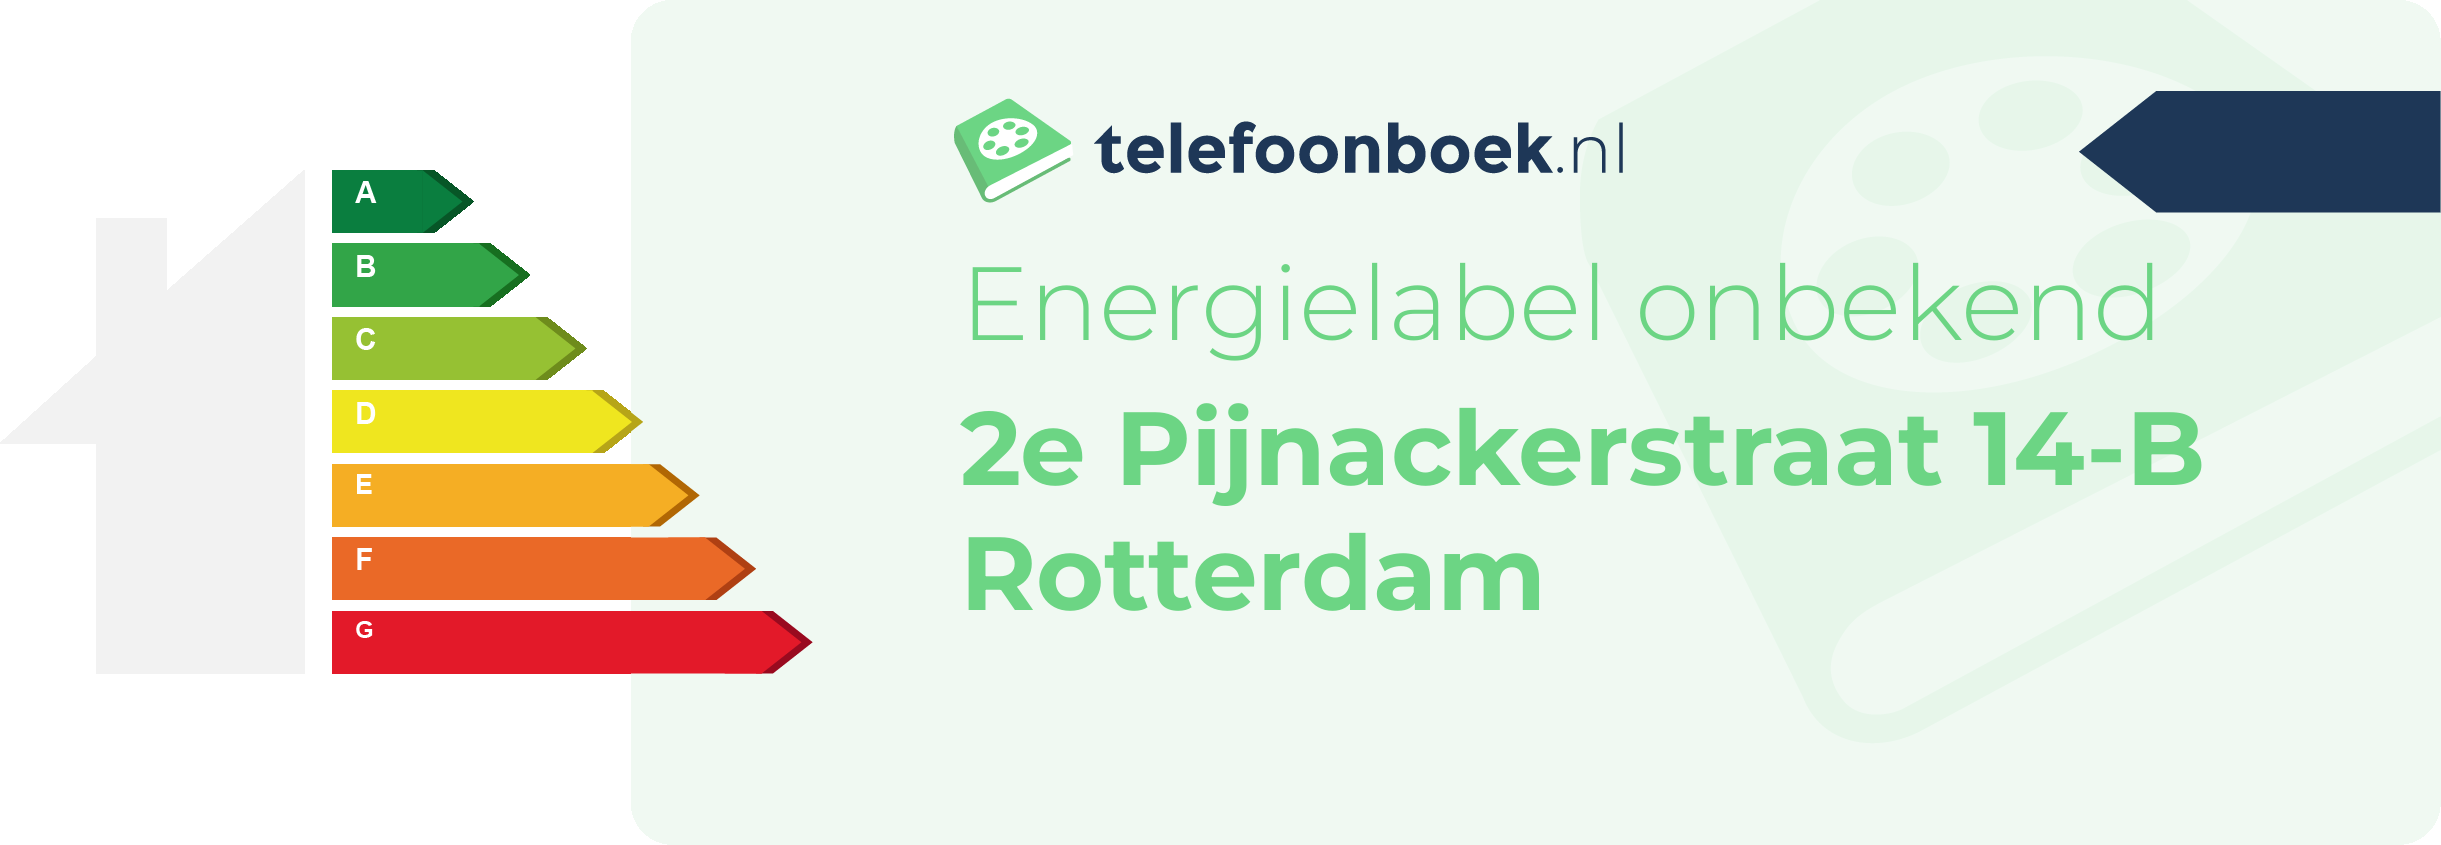 Energielabel 2e Pijnackerstraat 14-B Rotterdam